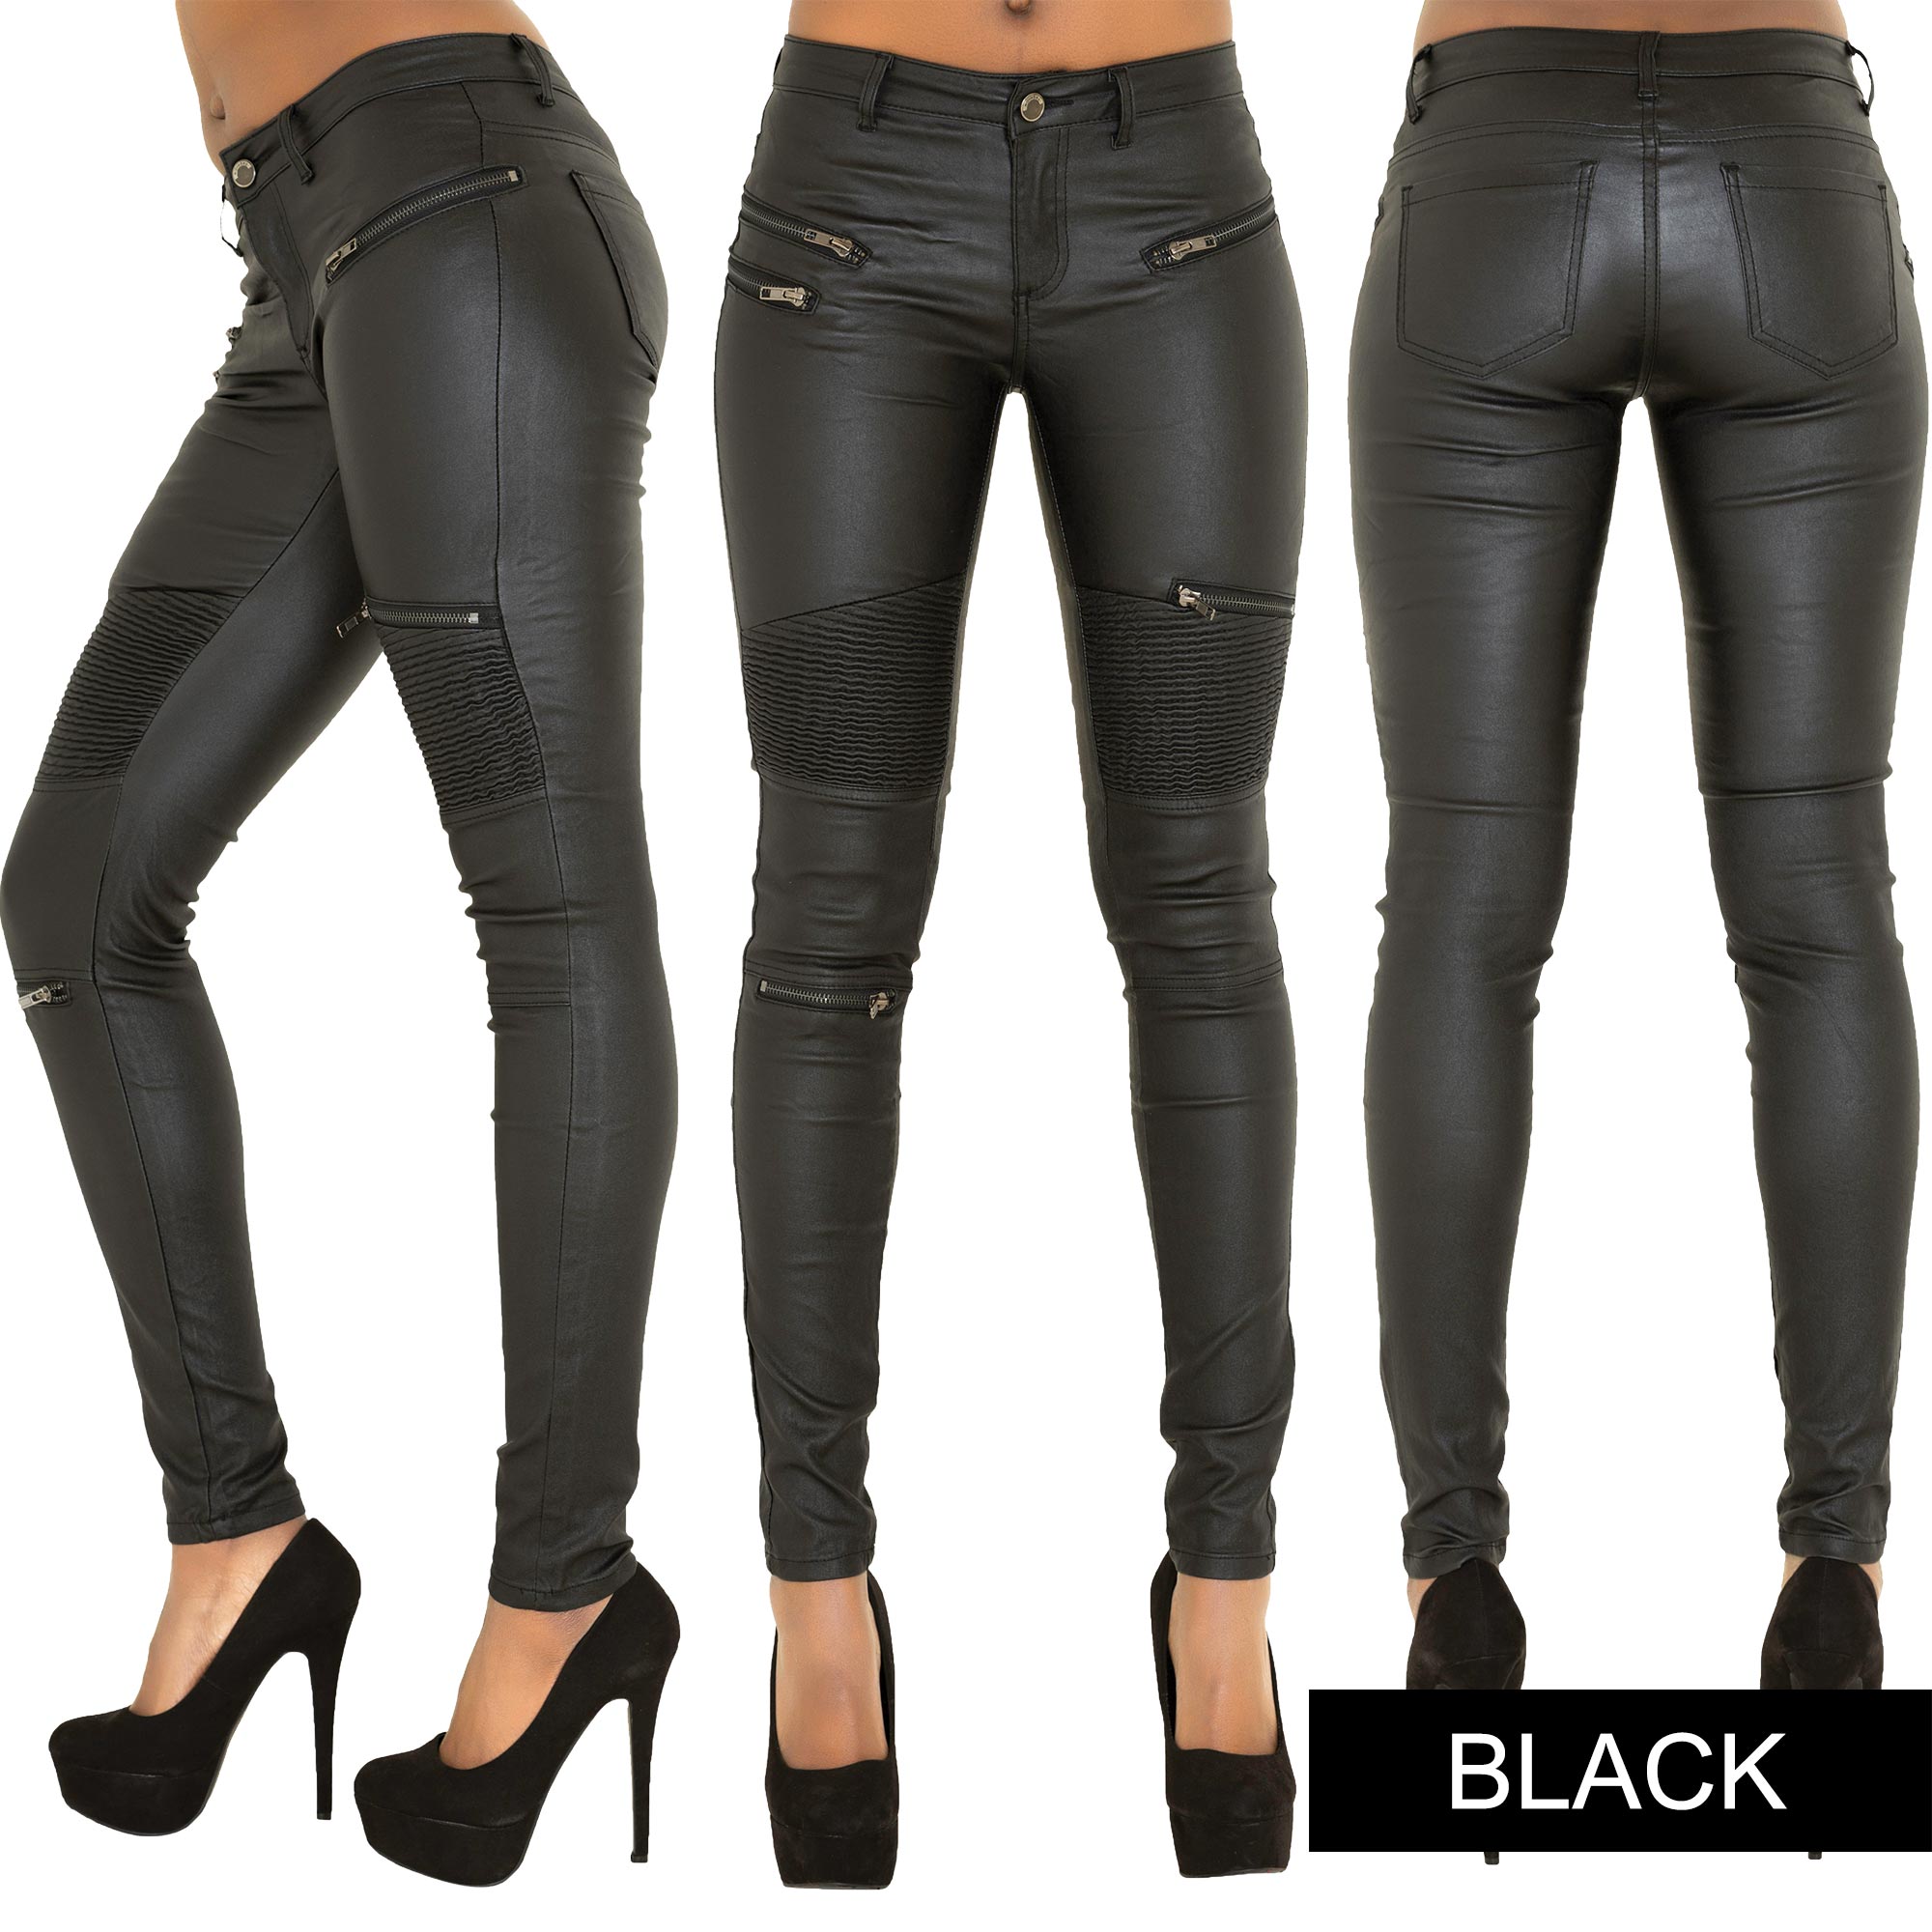 New Look faux leather biker leggings in black